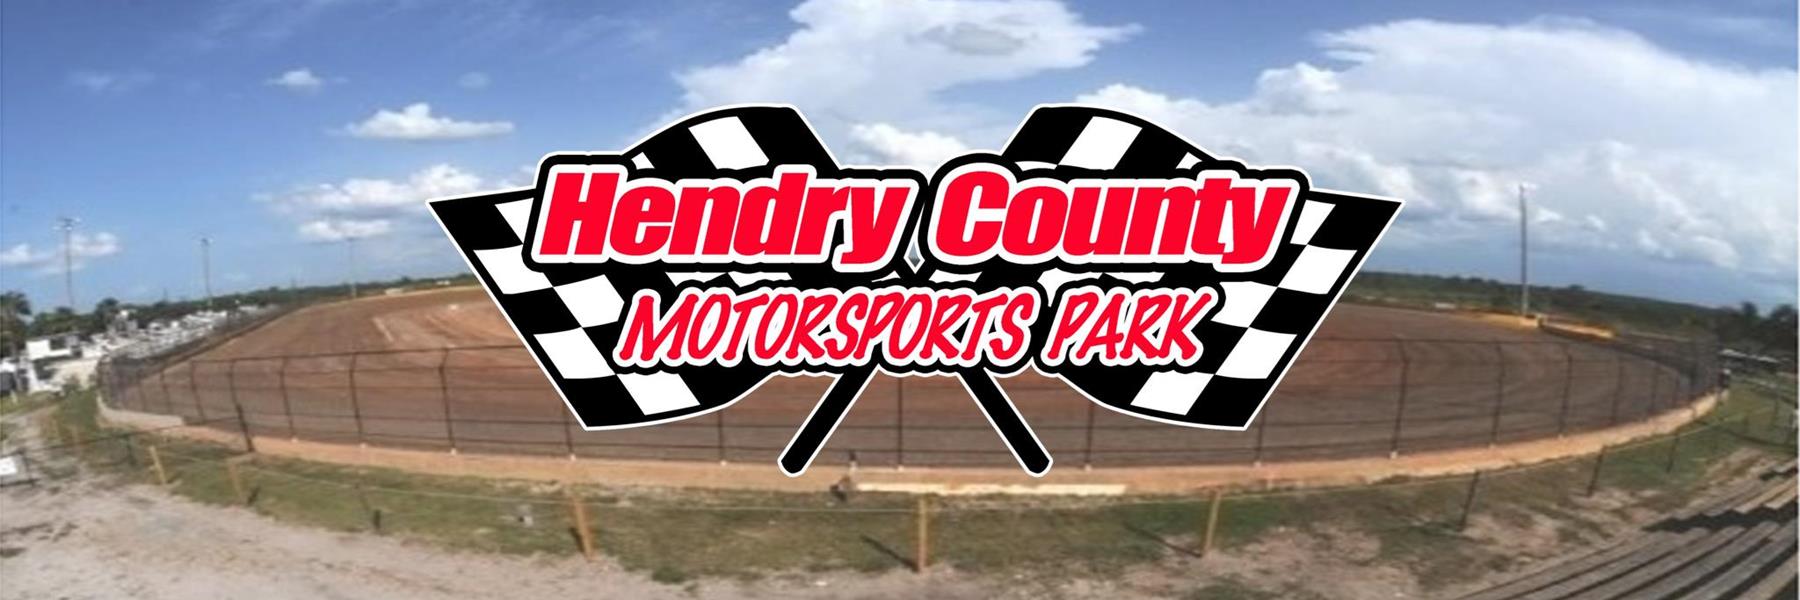 2/24/2023 - Hendry County Motorsports Park